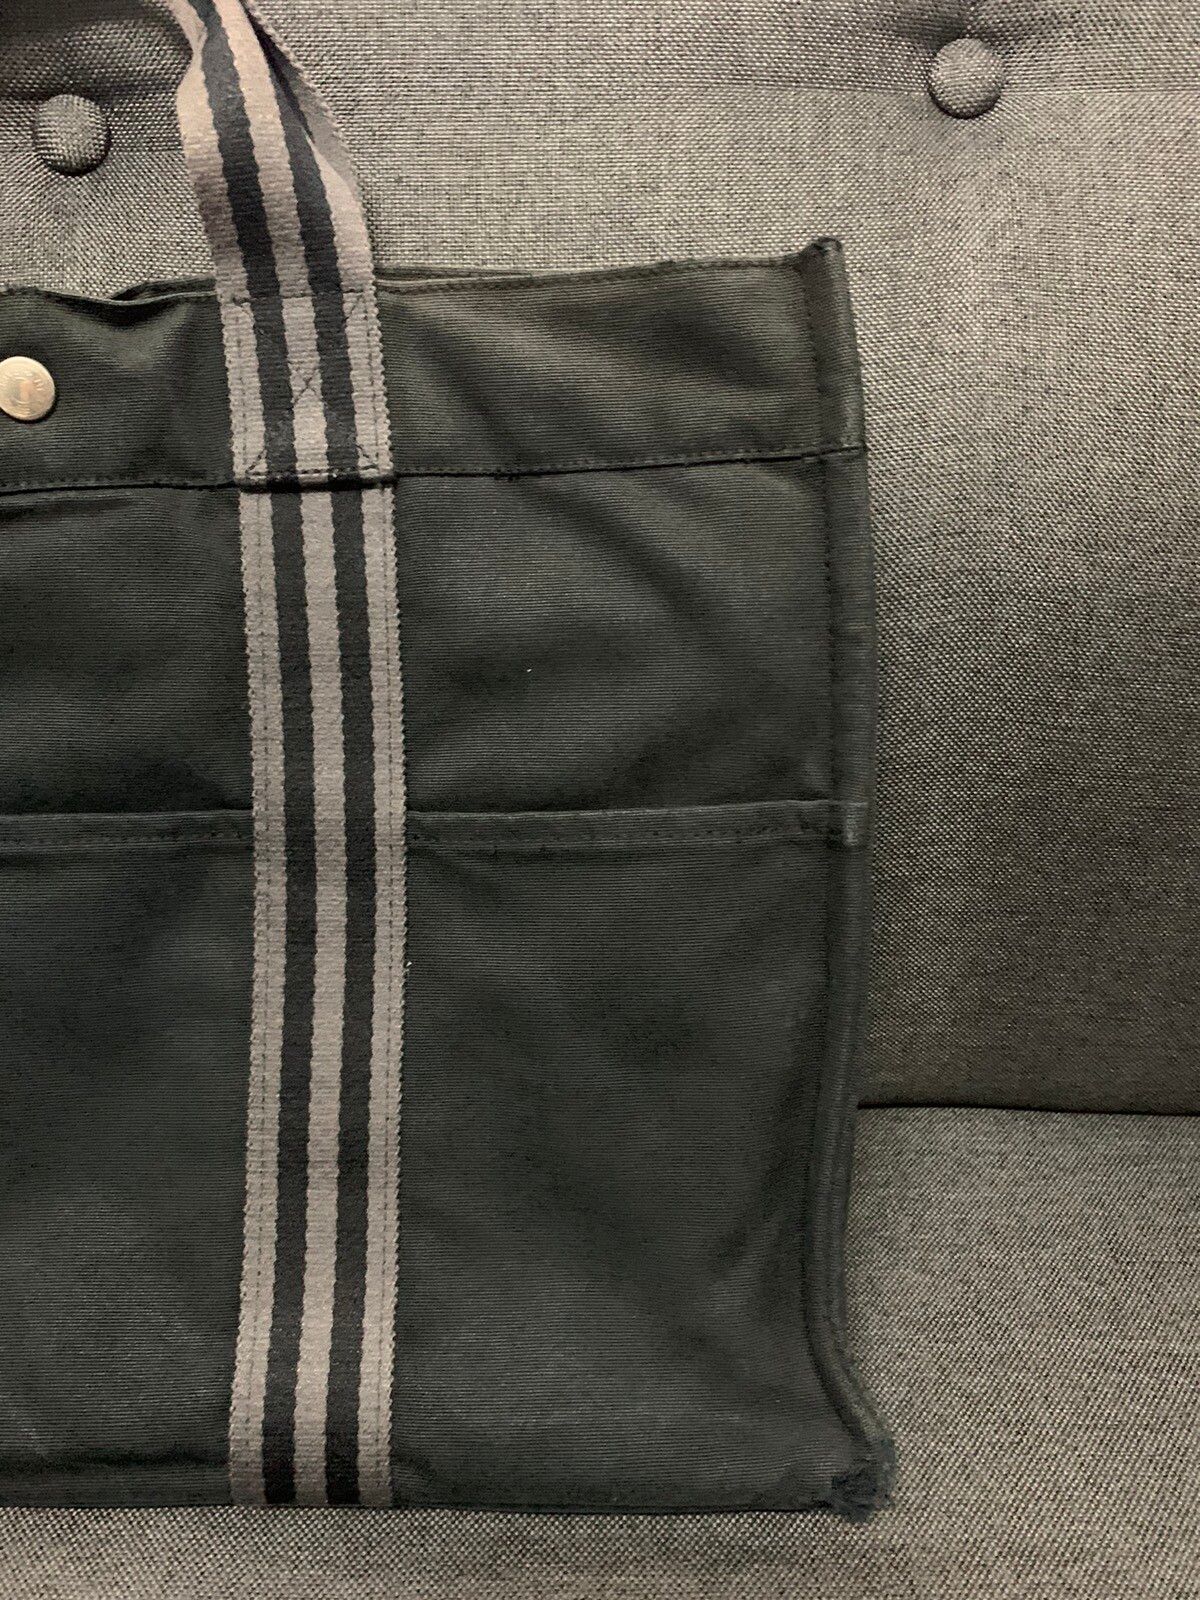 Vintage Faded Distressed Hermes Bag Tote bag - 3